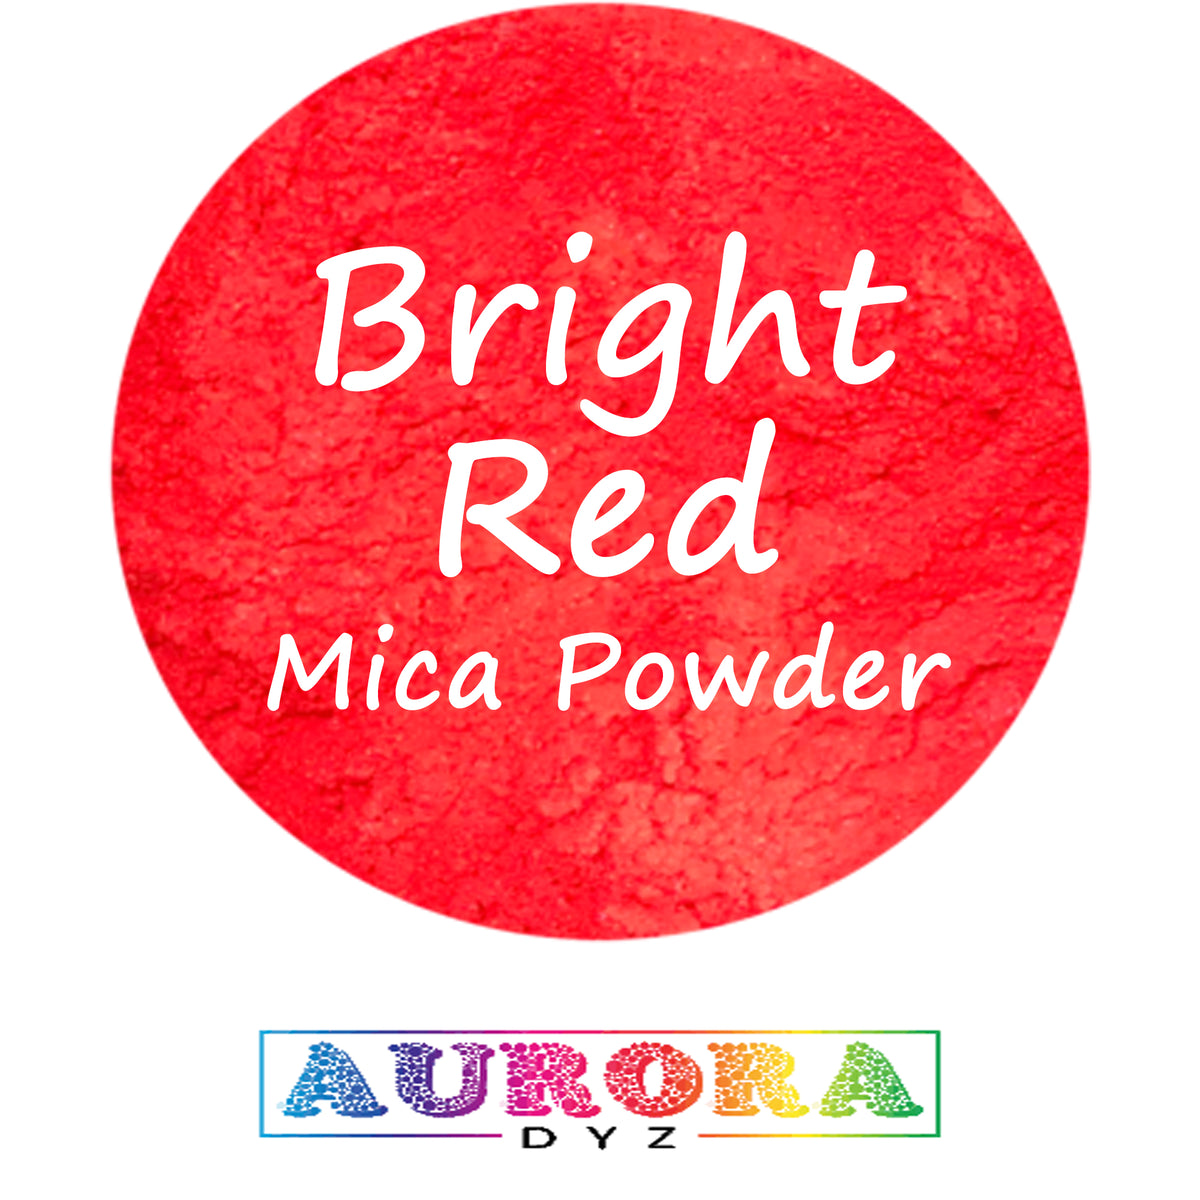 Bright Red Mica Powder